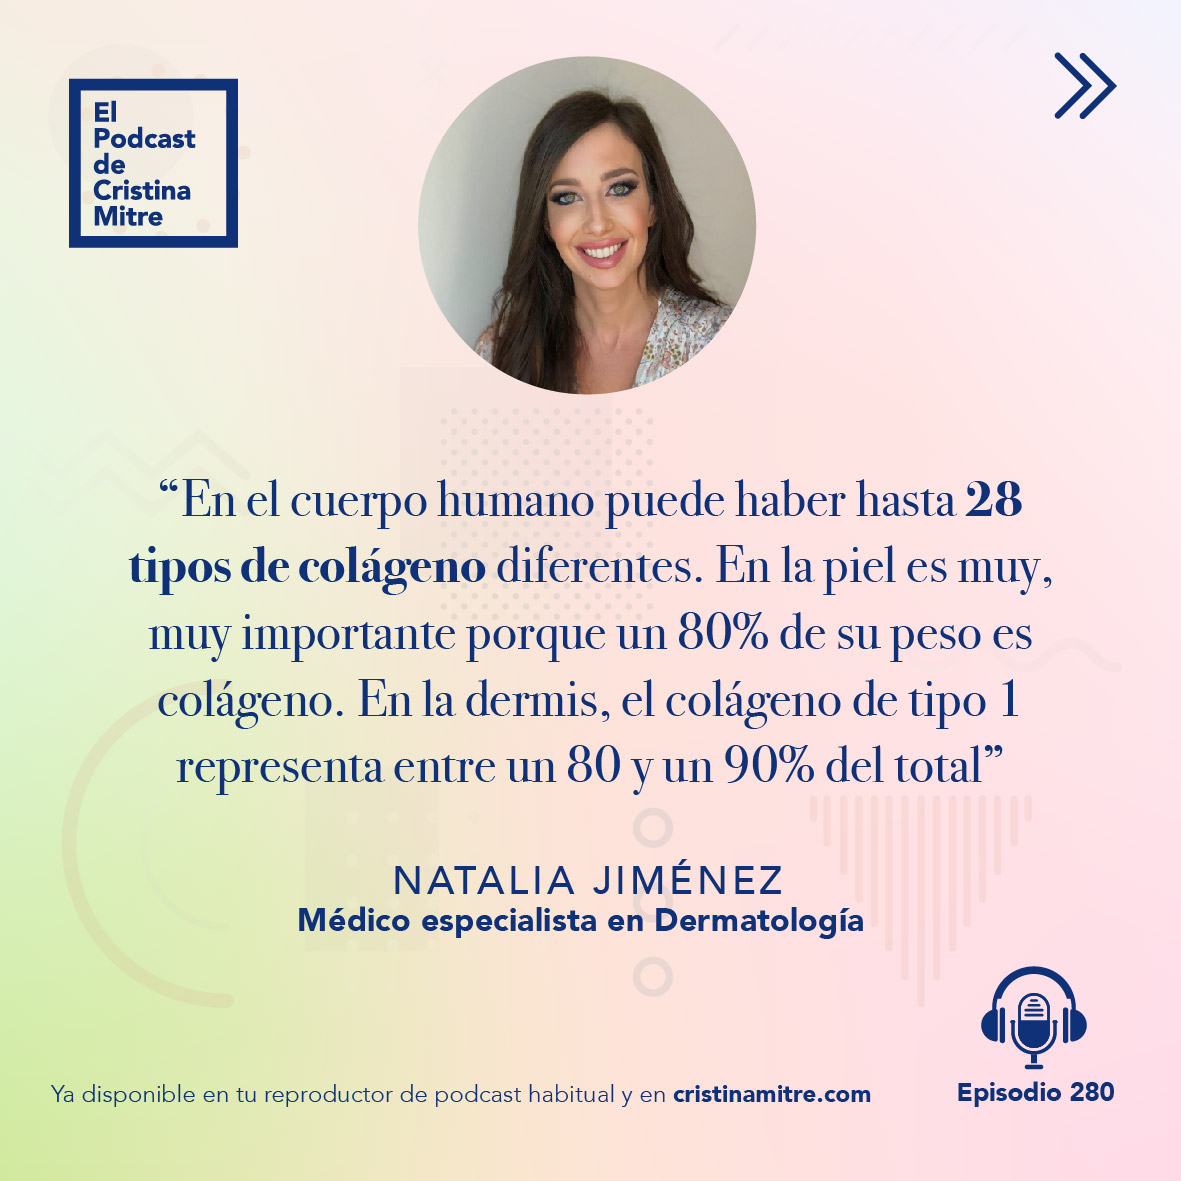 El podcast de Cristina Mitre Colágeno Marta Castroviejo Natalia Jimenez